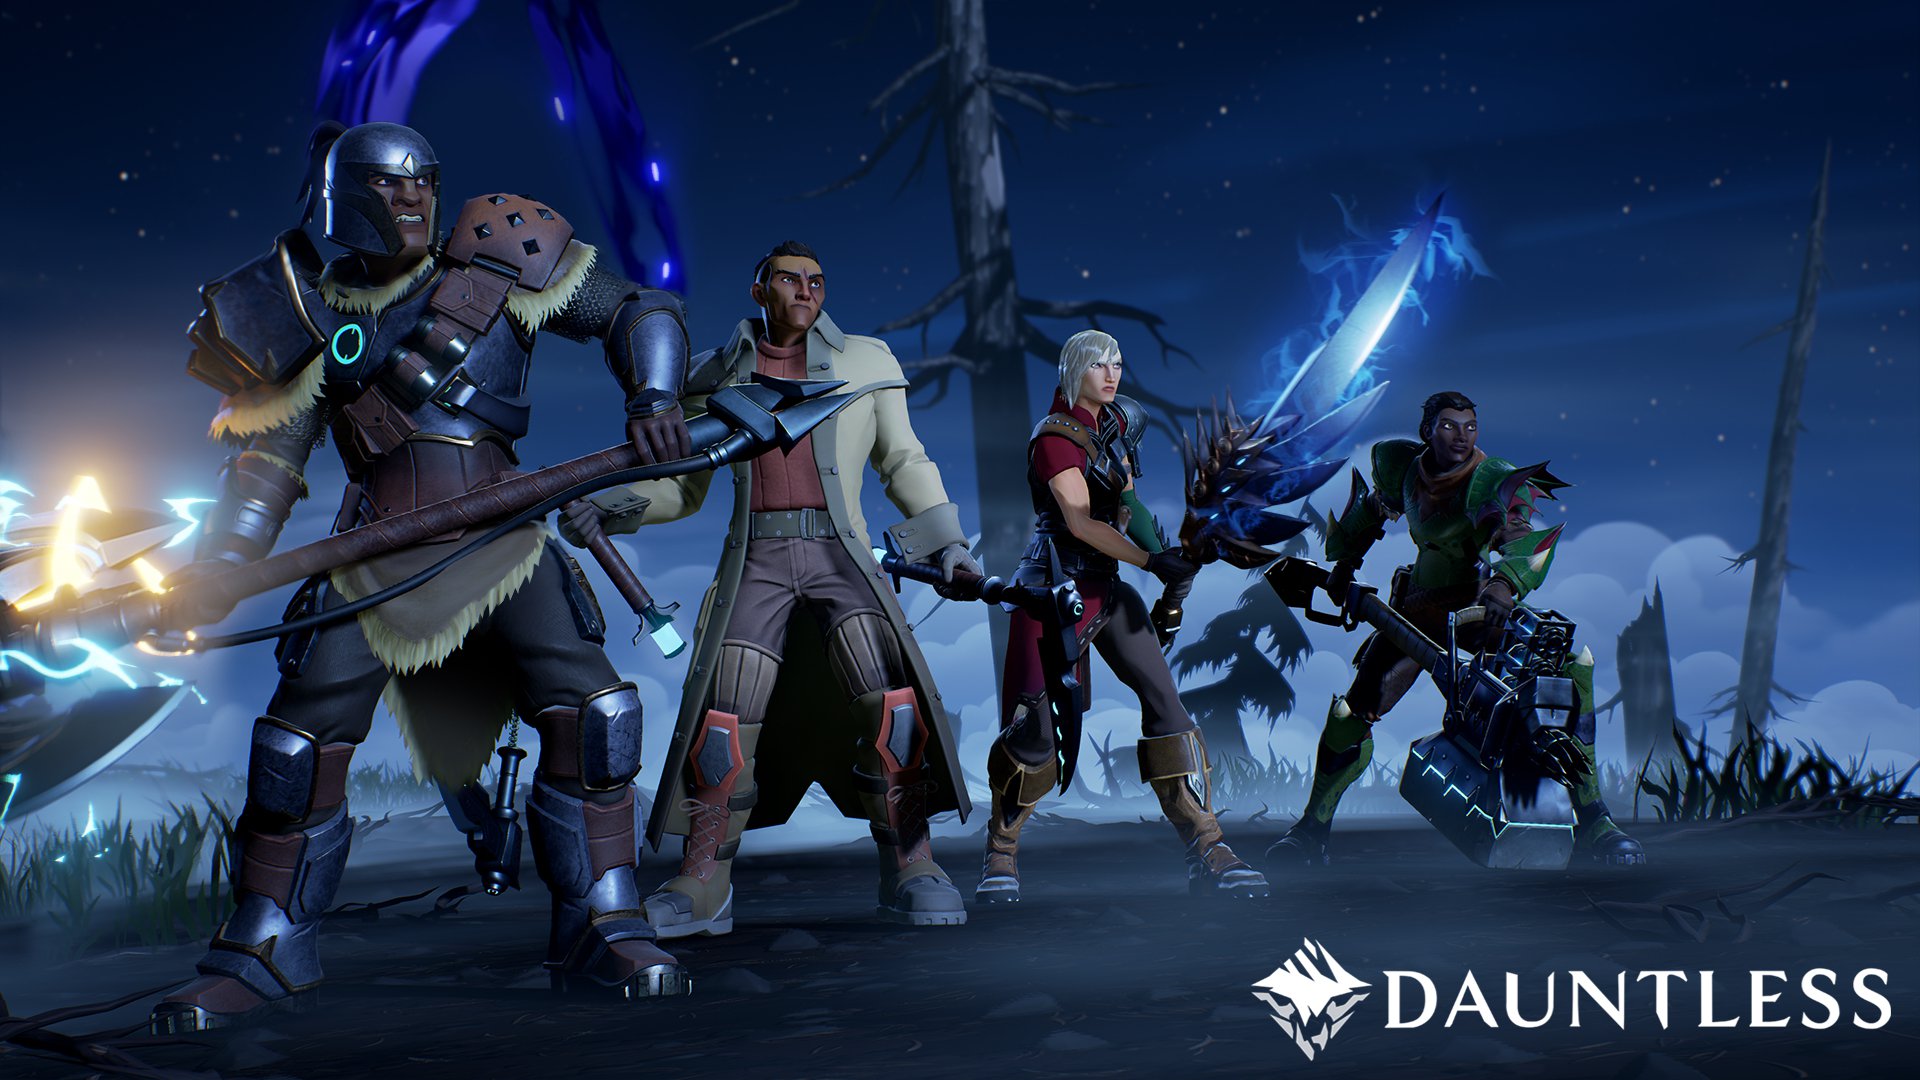 Former Bioware, Riot, Blizzard Devs Reveal 'Dauntless'